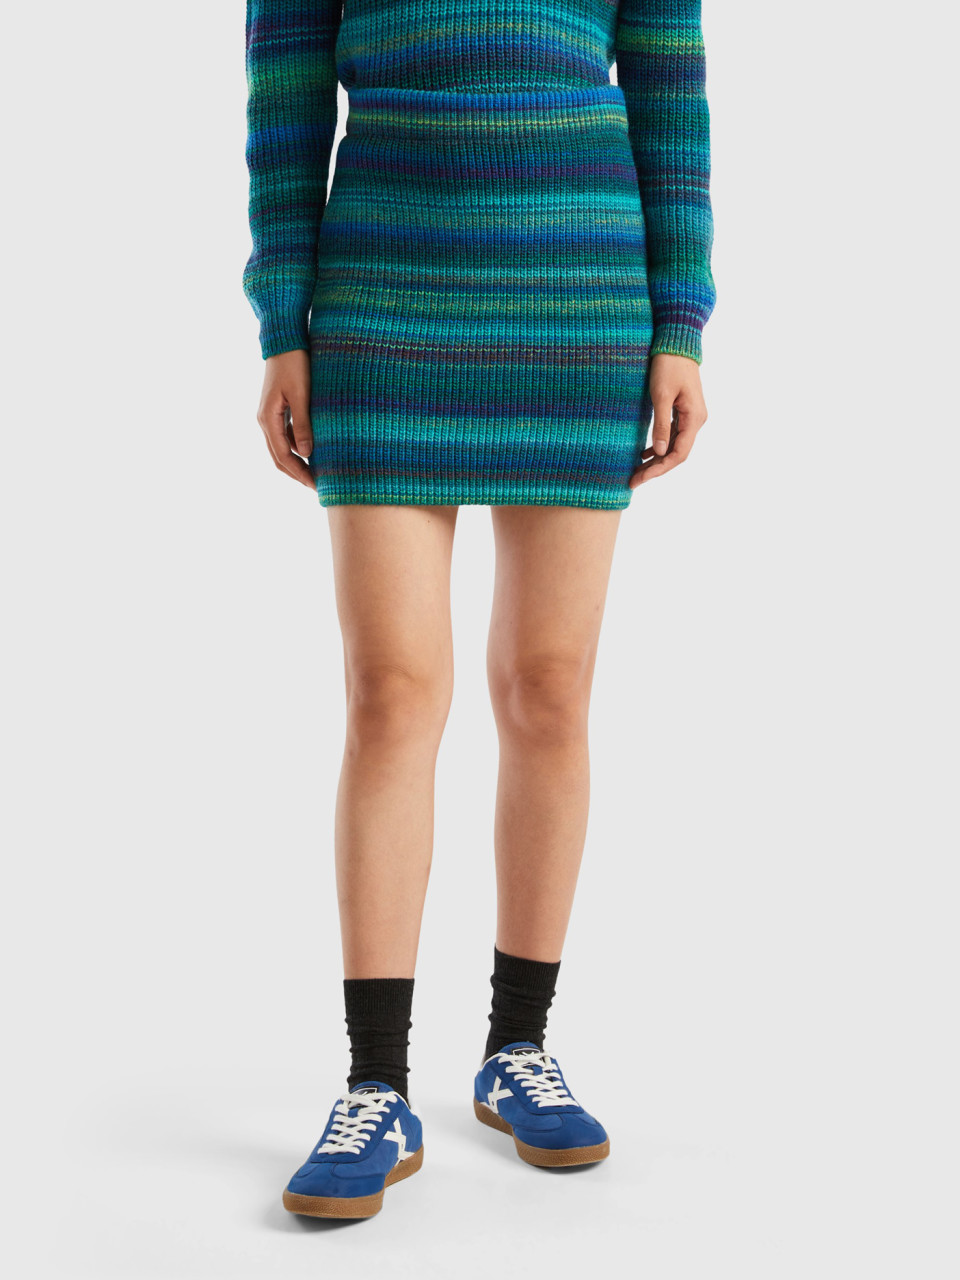 Benetton, Striped Knit Mini Skirt, Multi-color, Women